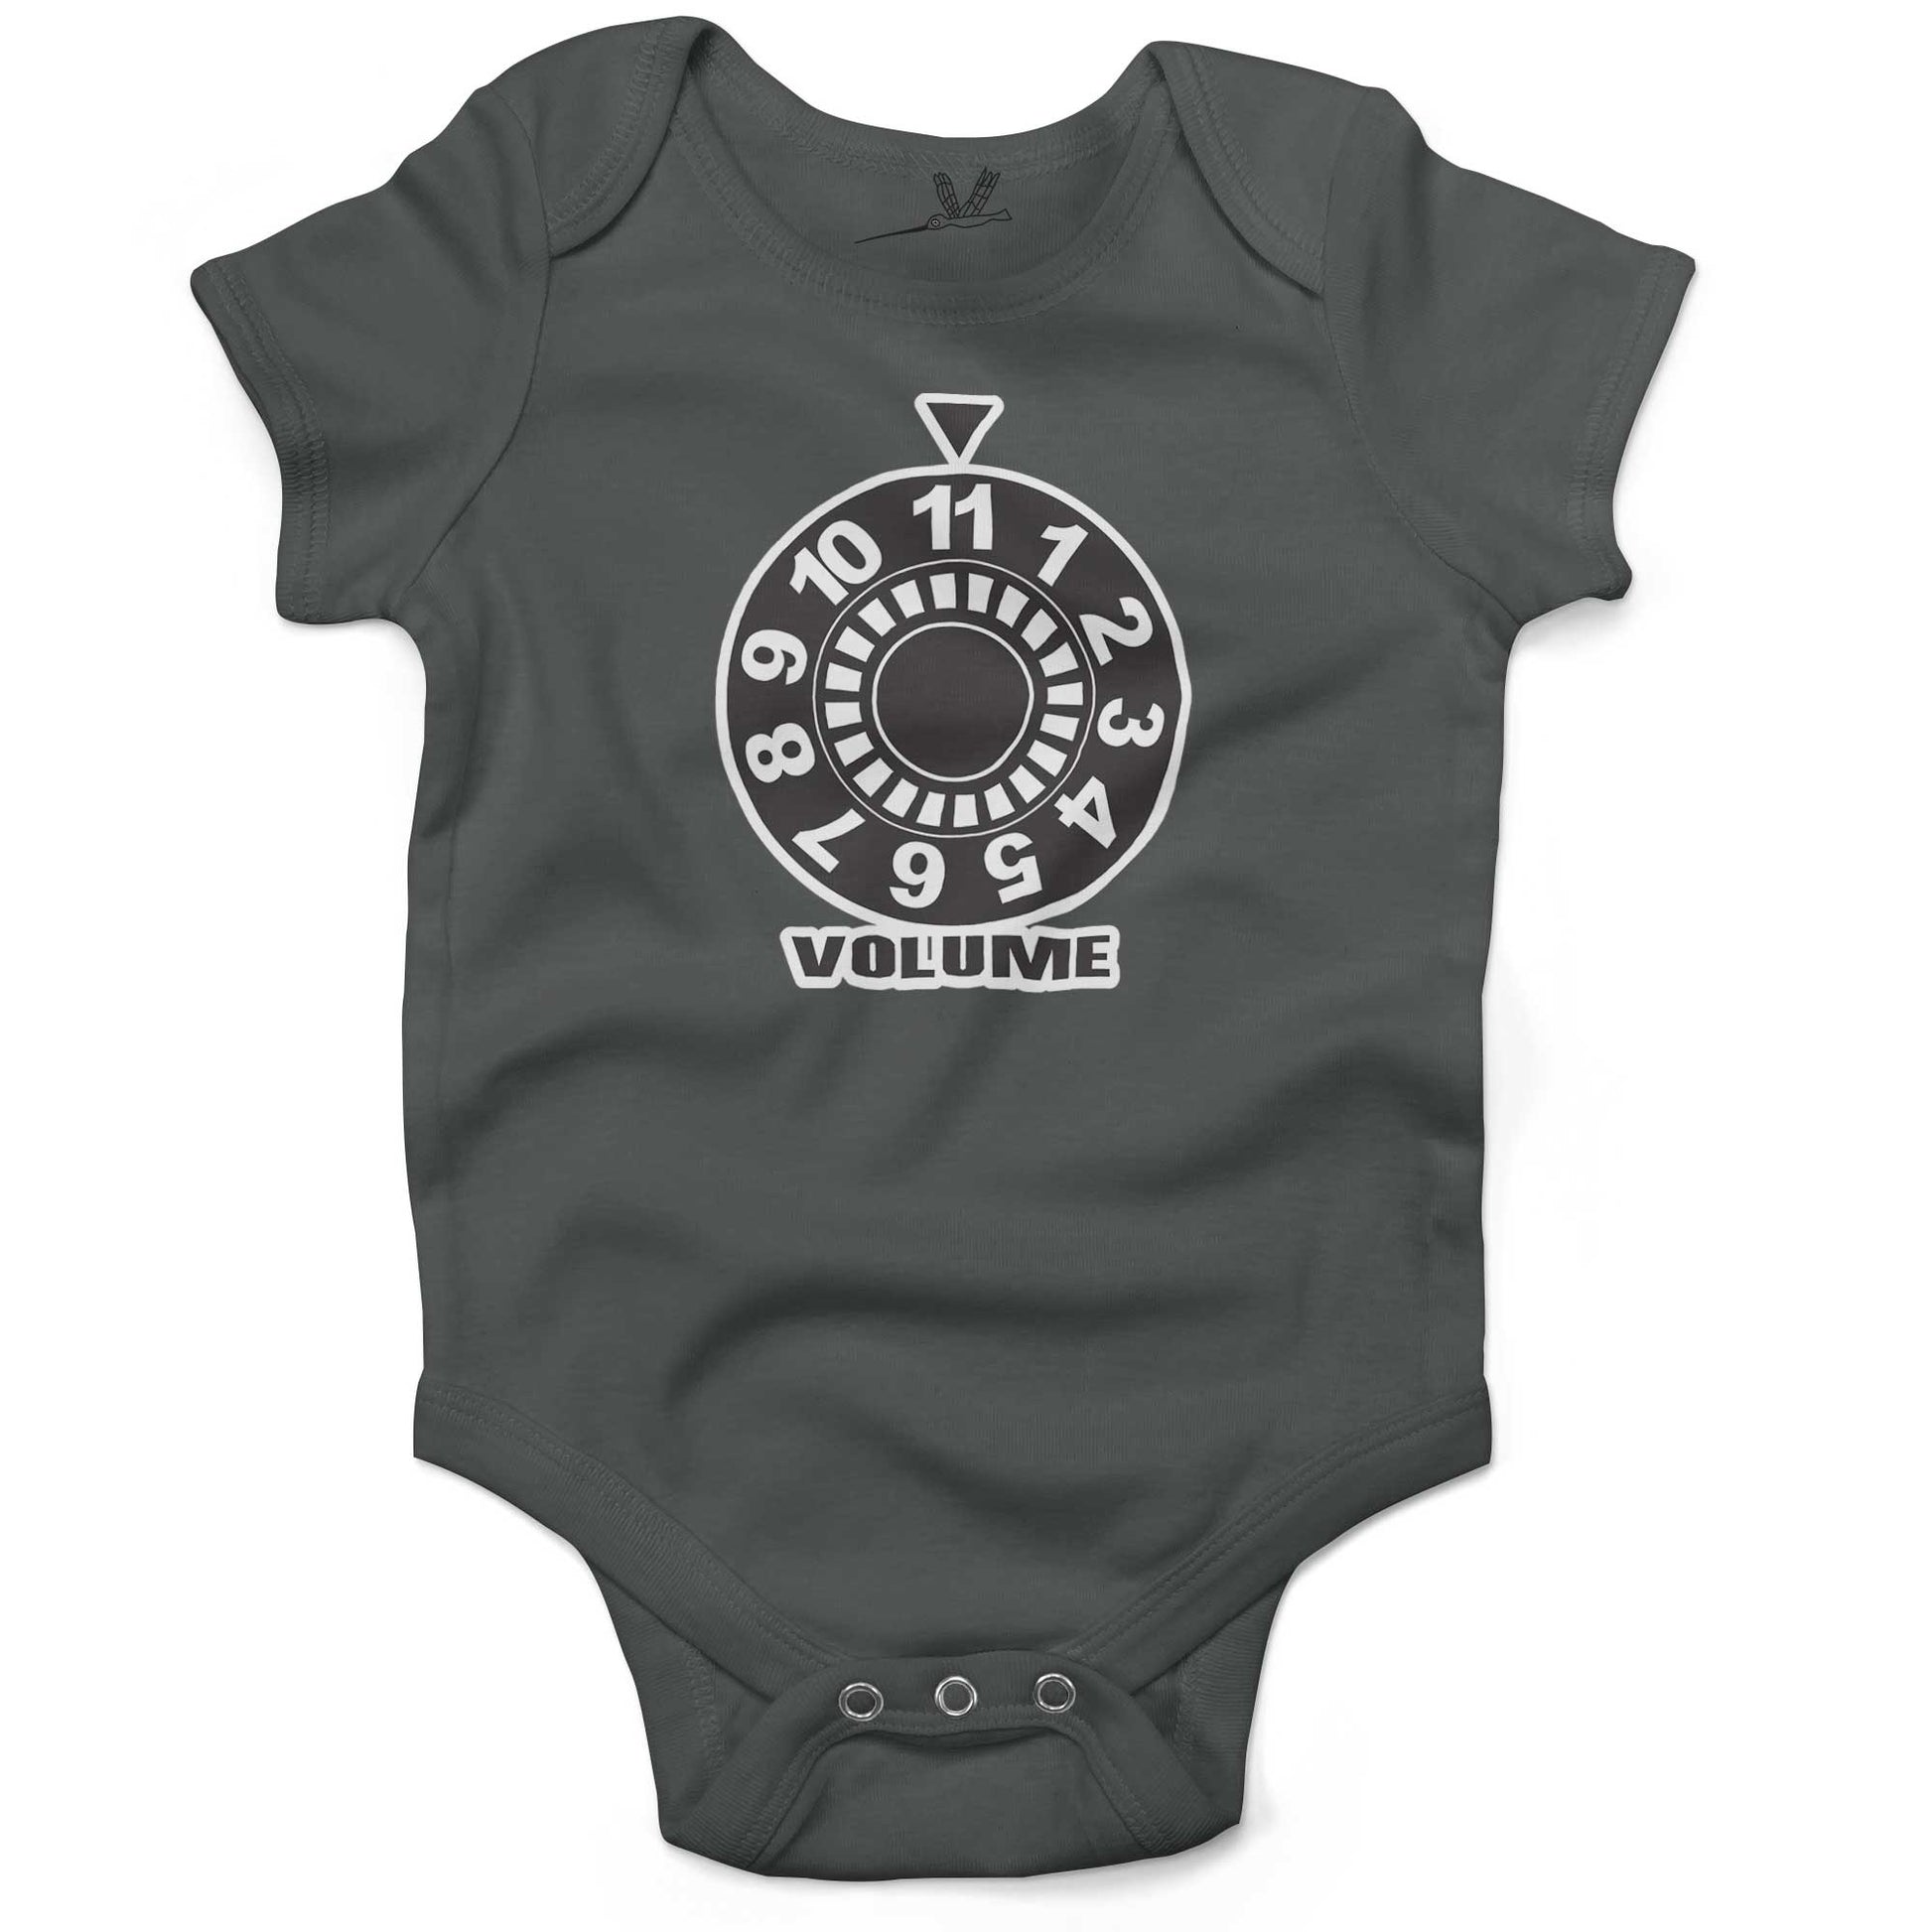 Turn It Up To 11 Infant Bodysuit or Raglan Baby Tee-Organic Asphalt-3-6 months